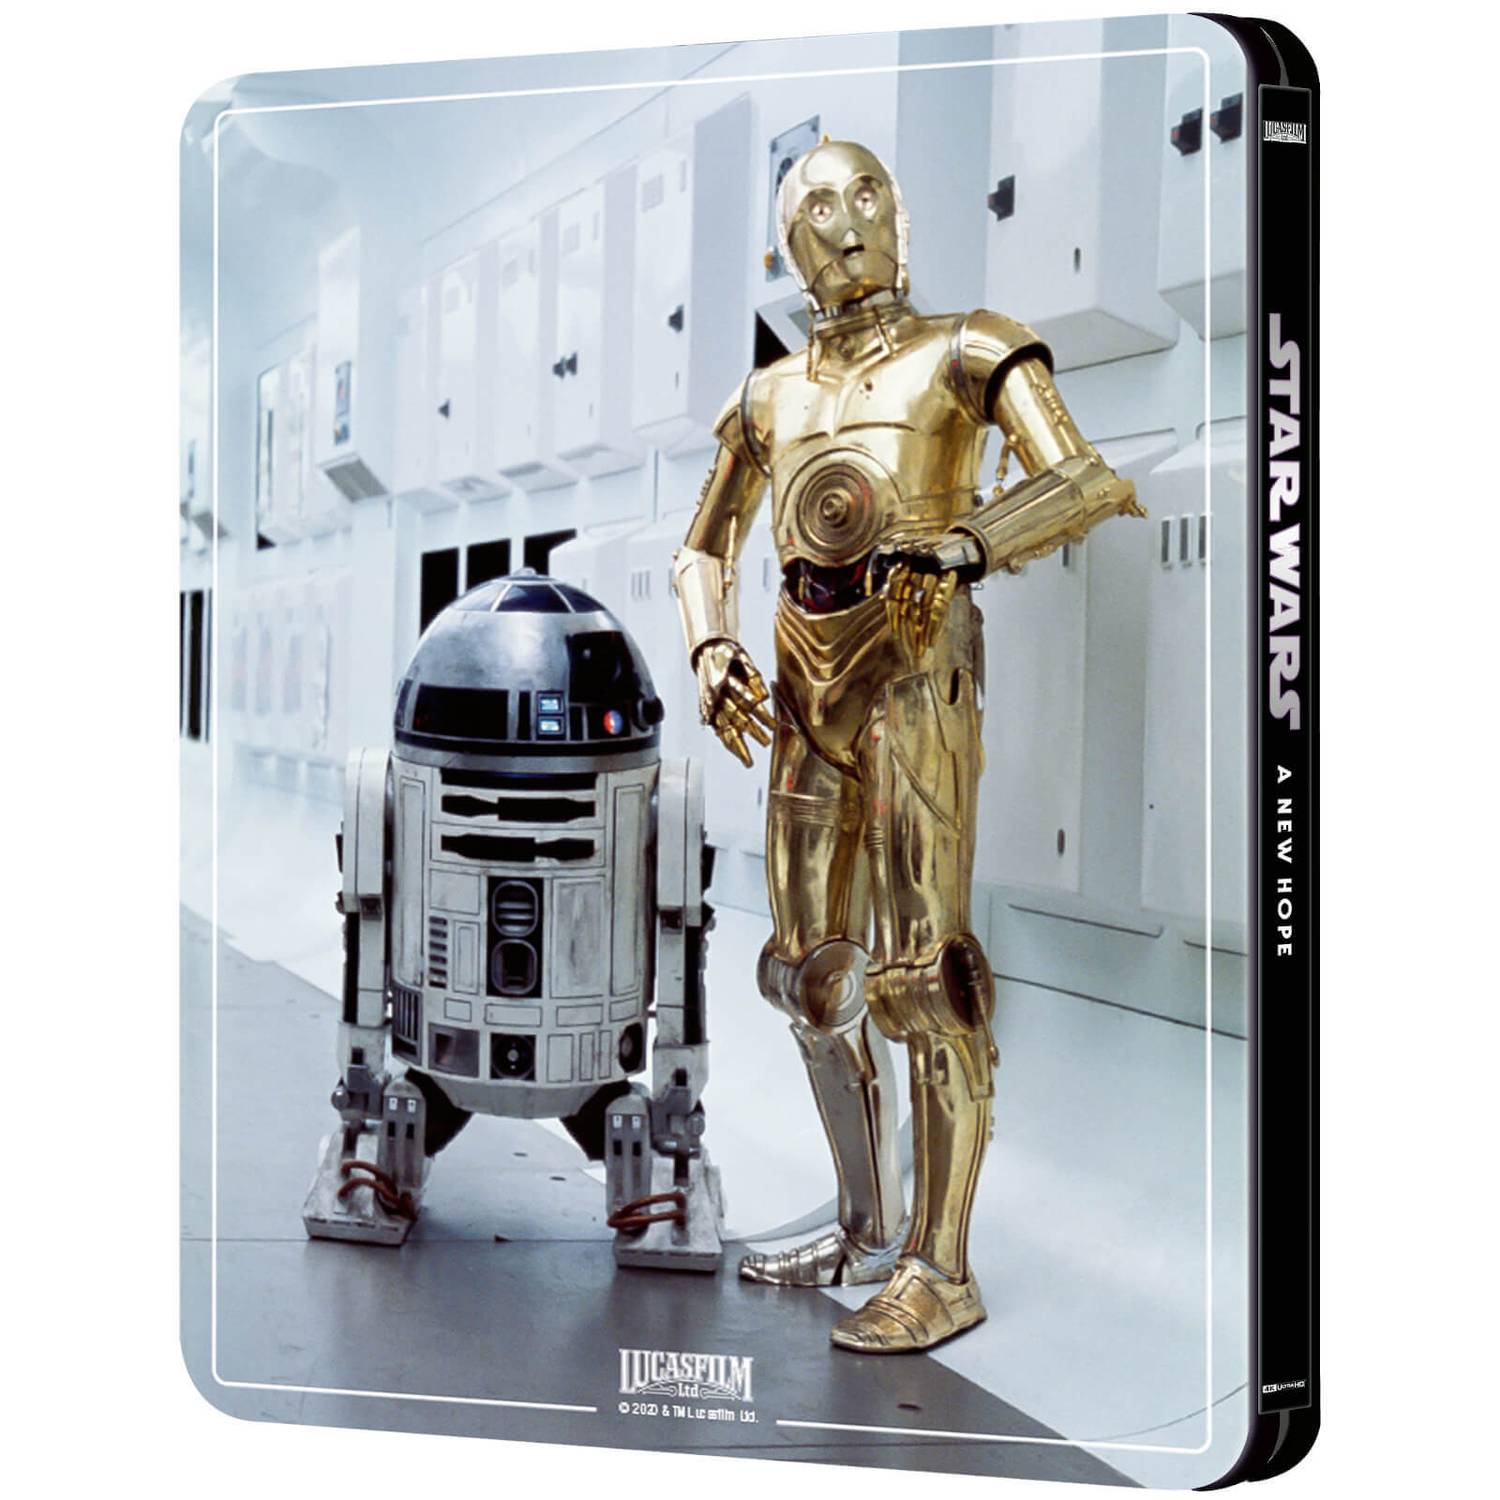 Звёздные войны: Эпизод IV – Новая надежда (англ. язык) (Blu-ray + Бонусный диск) Steelbook